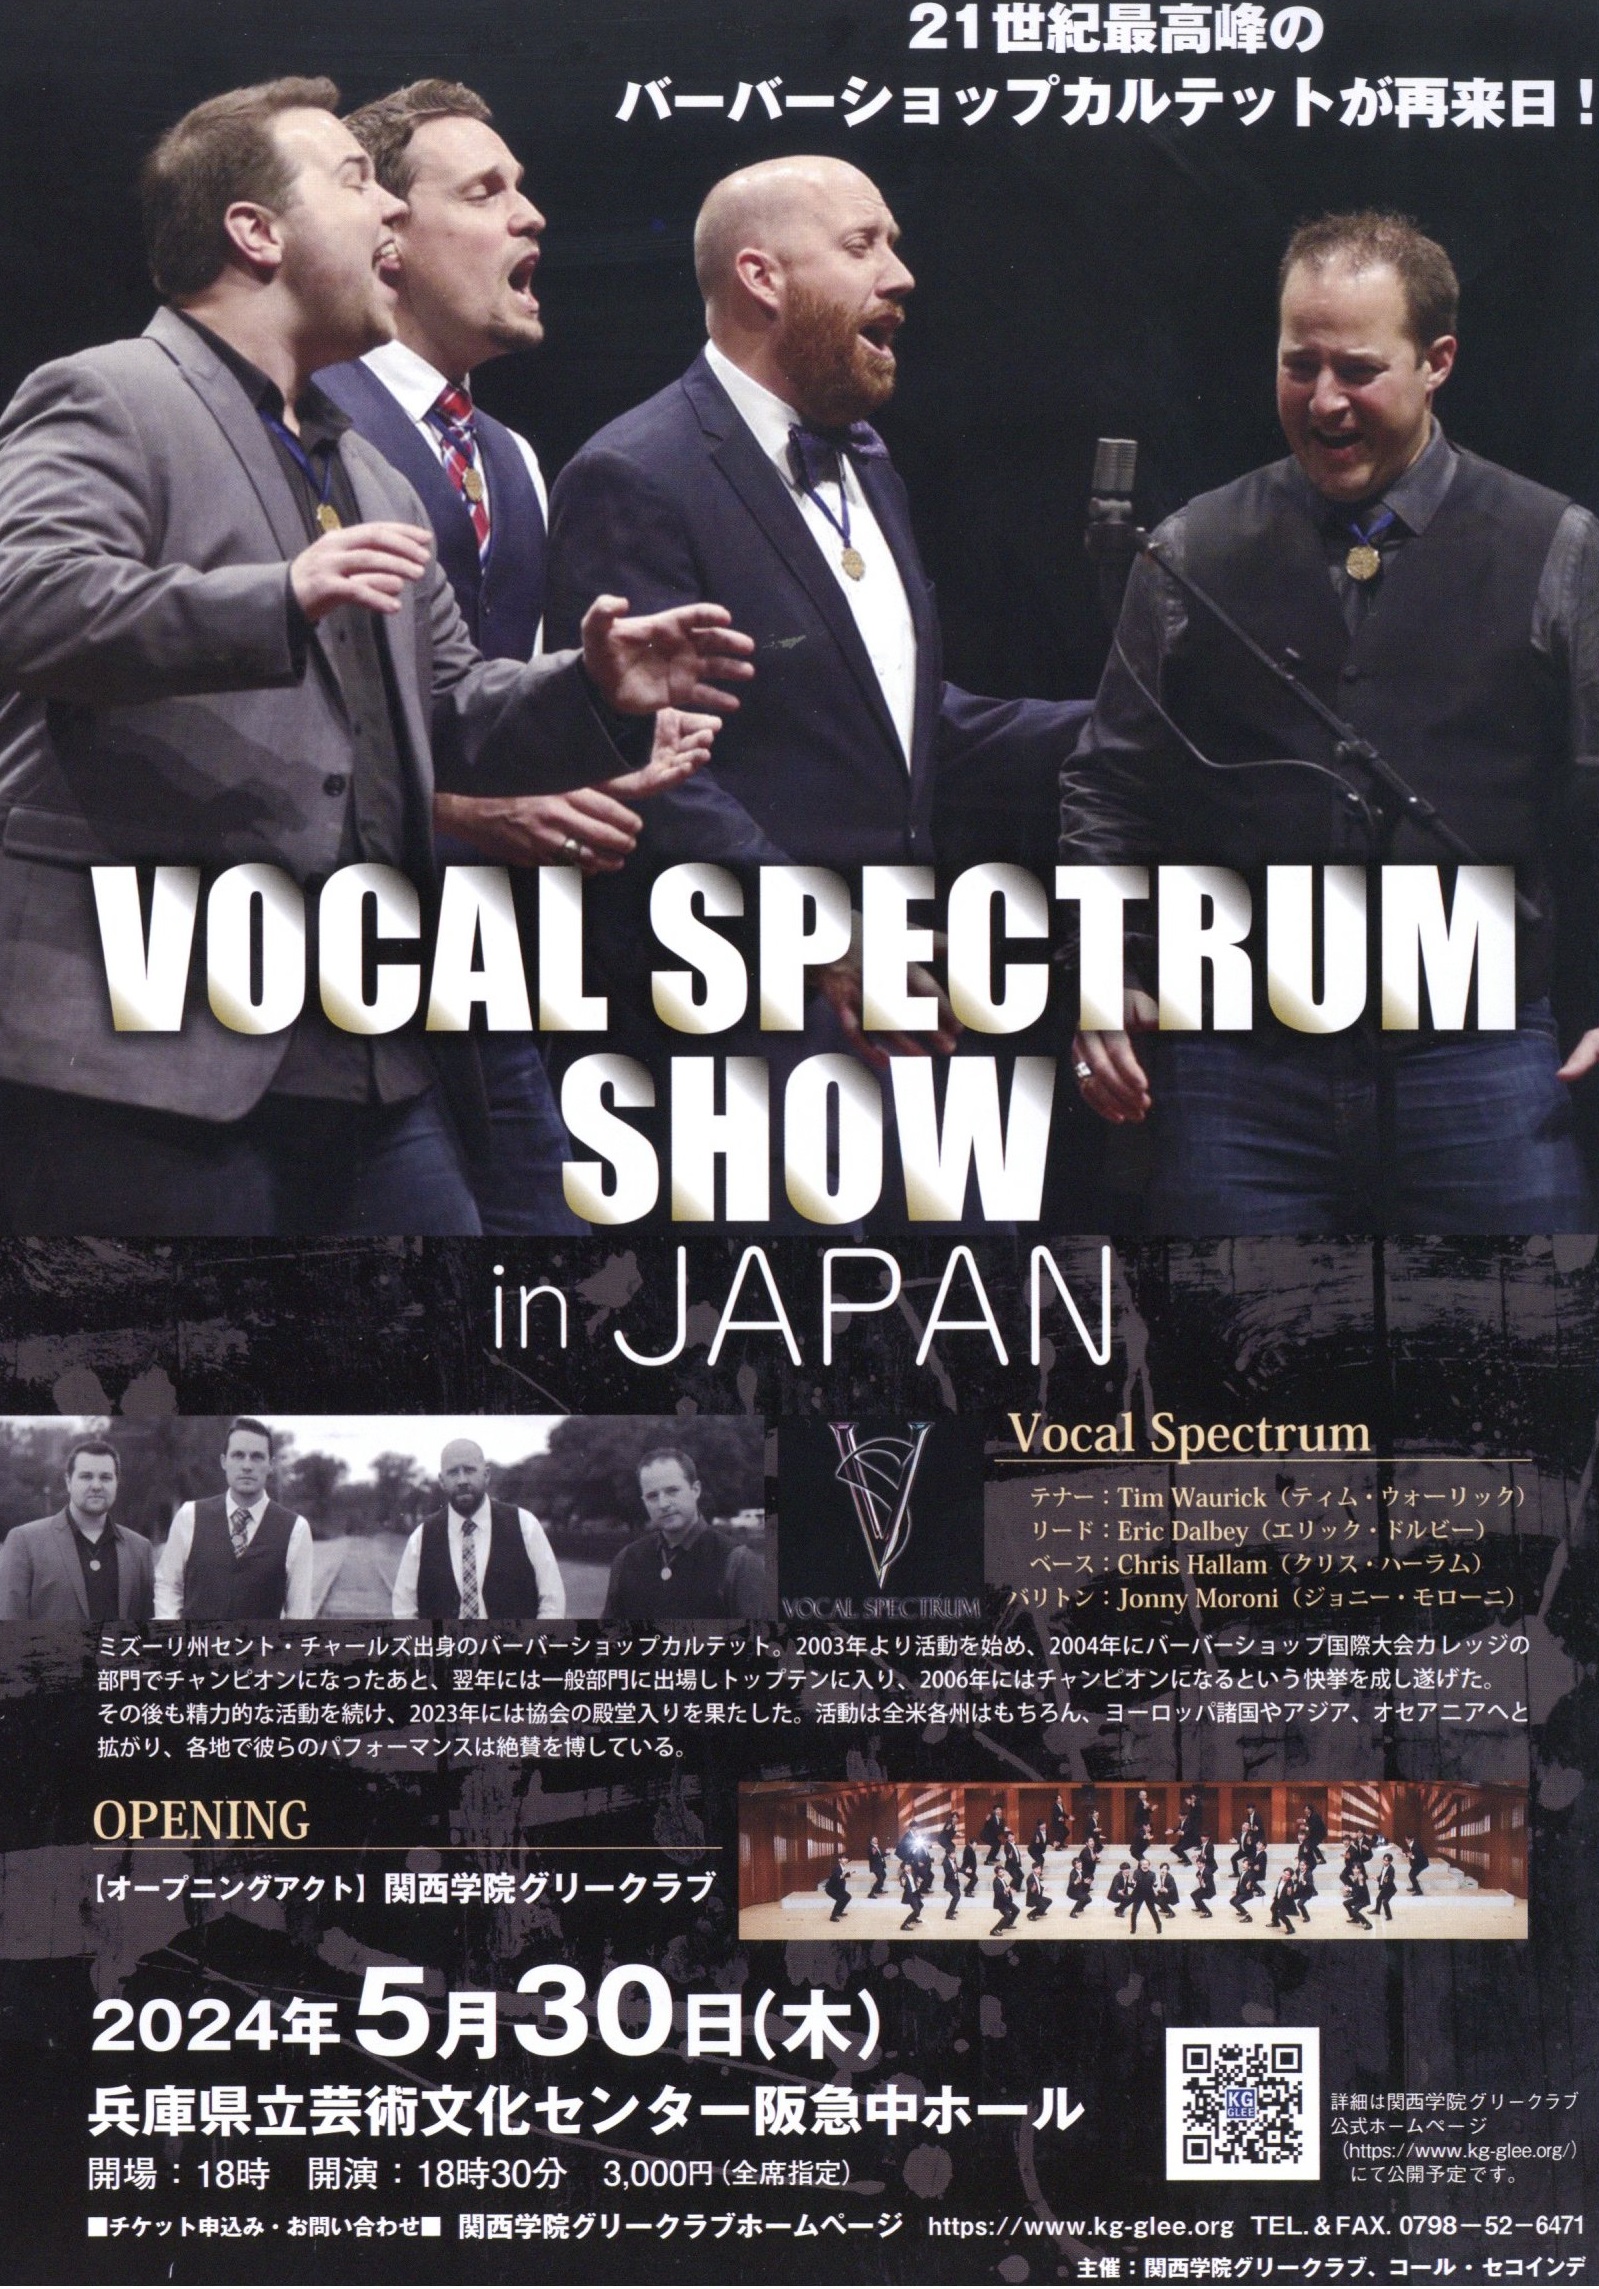 VOCAL SPECTRUM SHOW in JAPAN